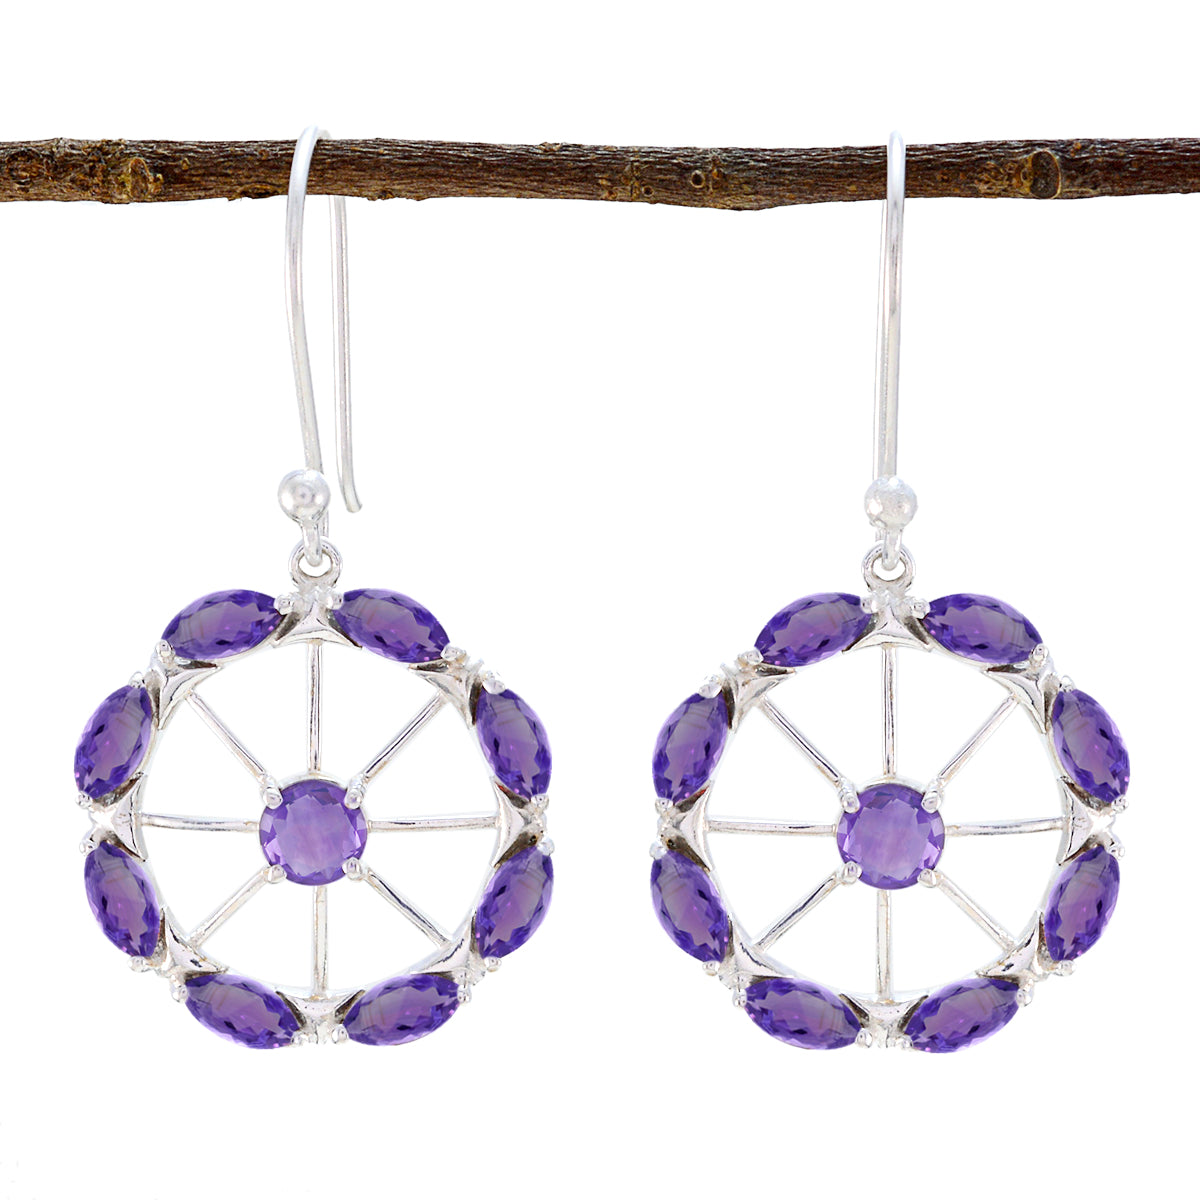 Riyo Natural Gemstone multi shape Faceted Purple Amethyst Silver Earring gift for girlfriend